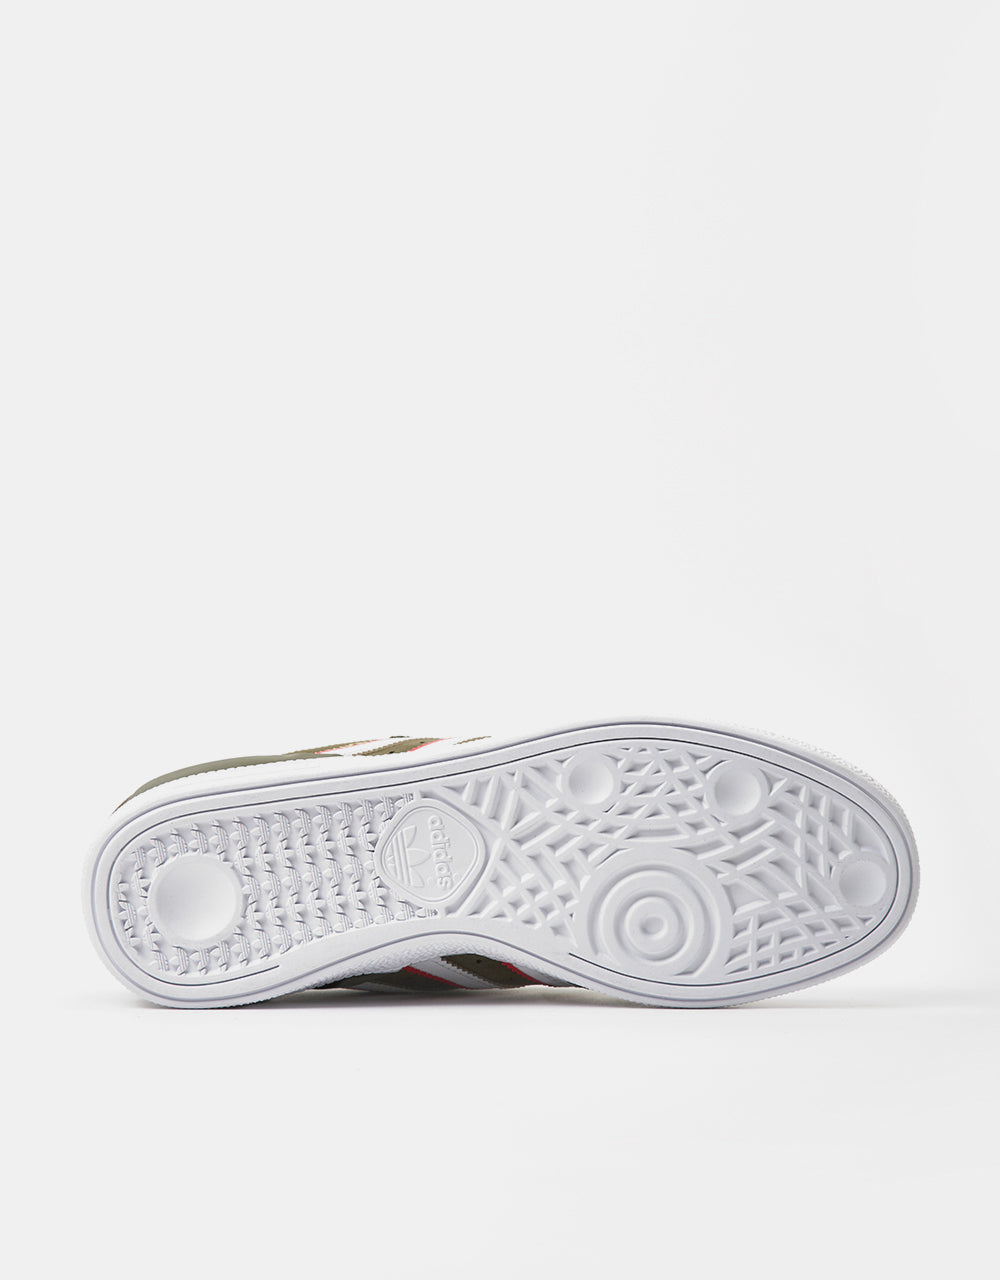 adidas x Dan Mancina Busenitz Pro Skate Shoes - Olive Strata/Red/White